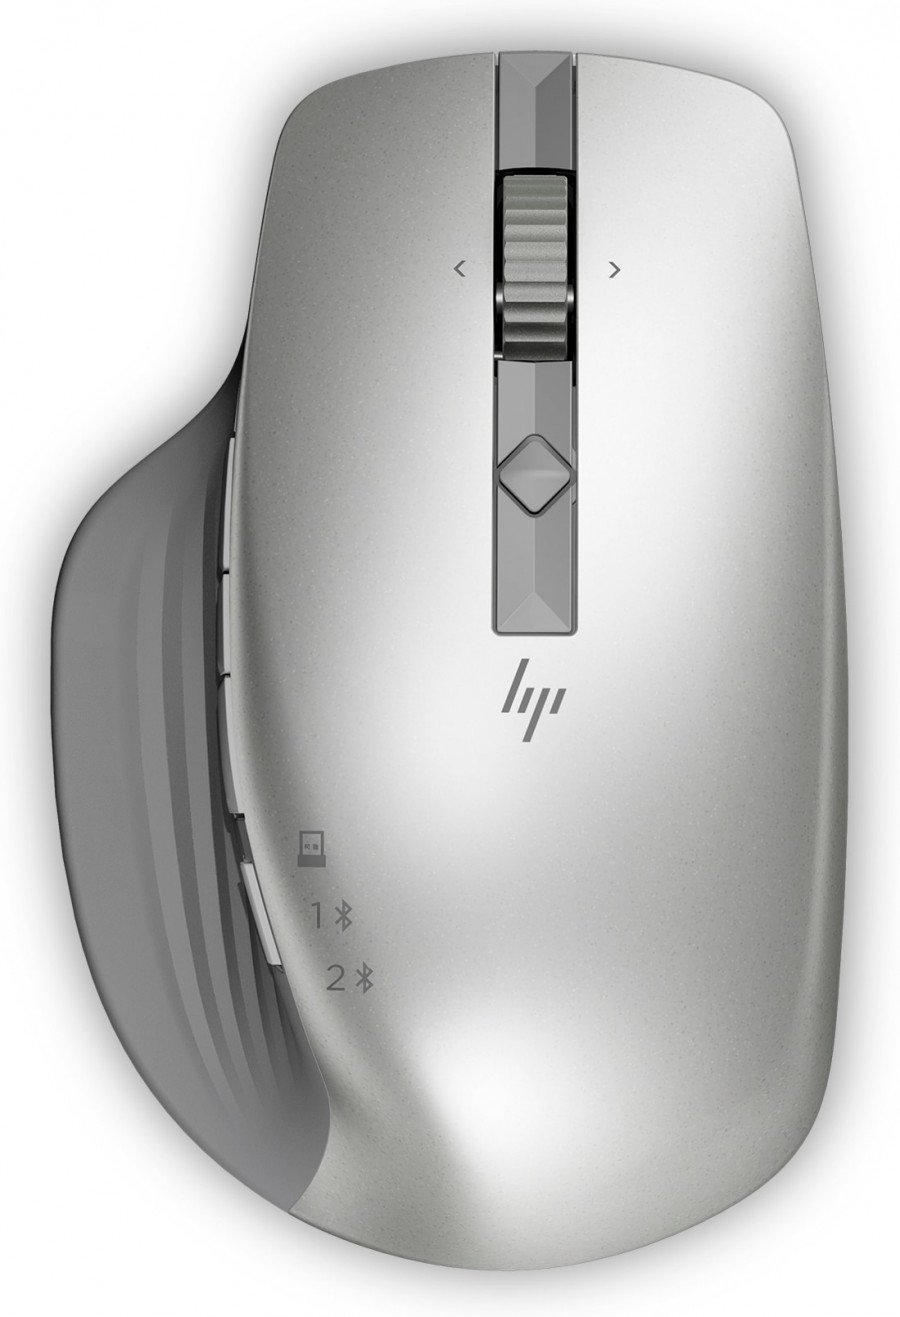 Image of Hp hewlett packard hp silver 930 creator wireless mouse HP Silver 930 Creator Wireless Mouse Componenti Informatica